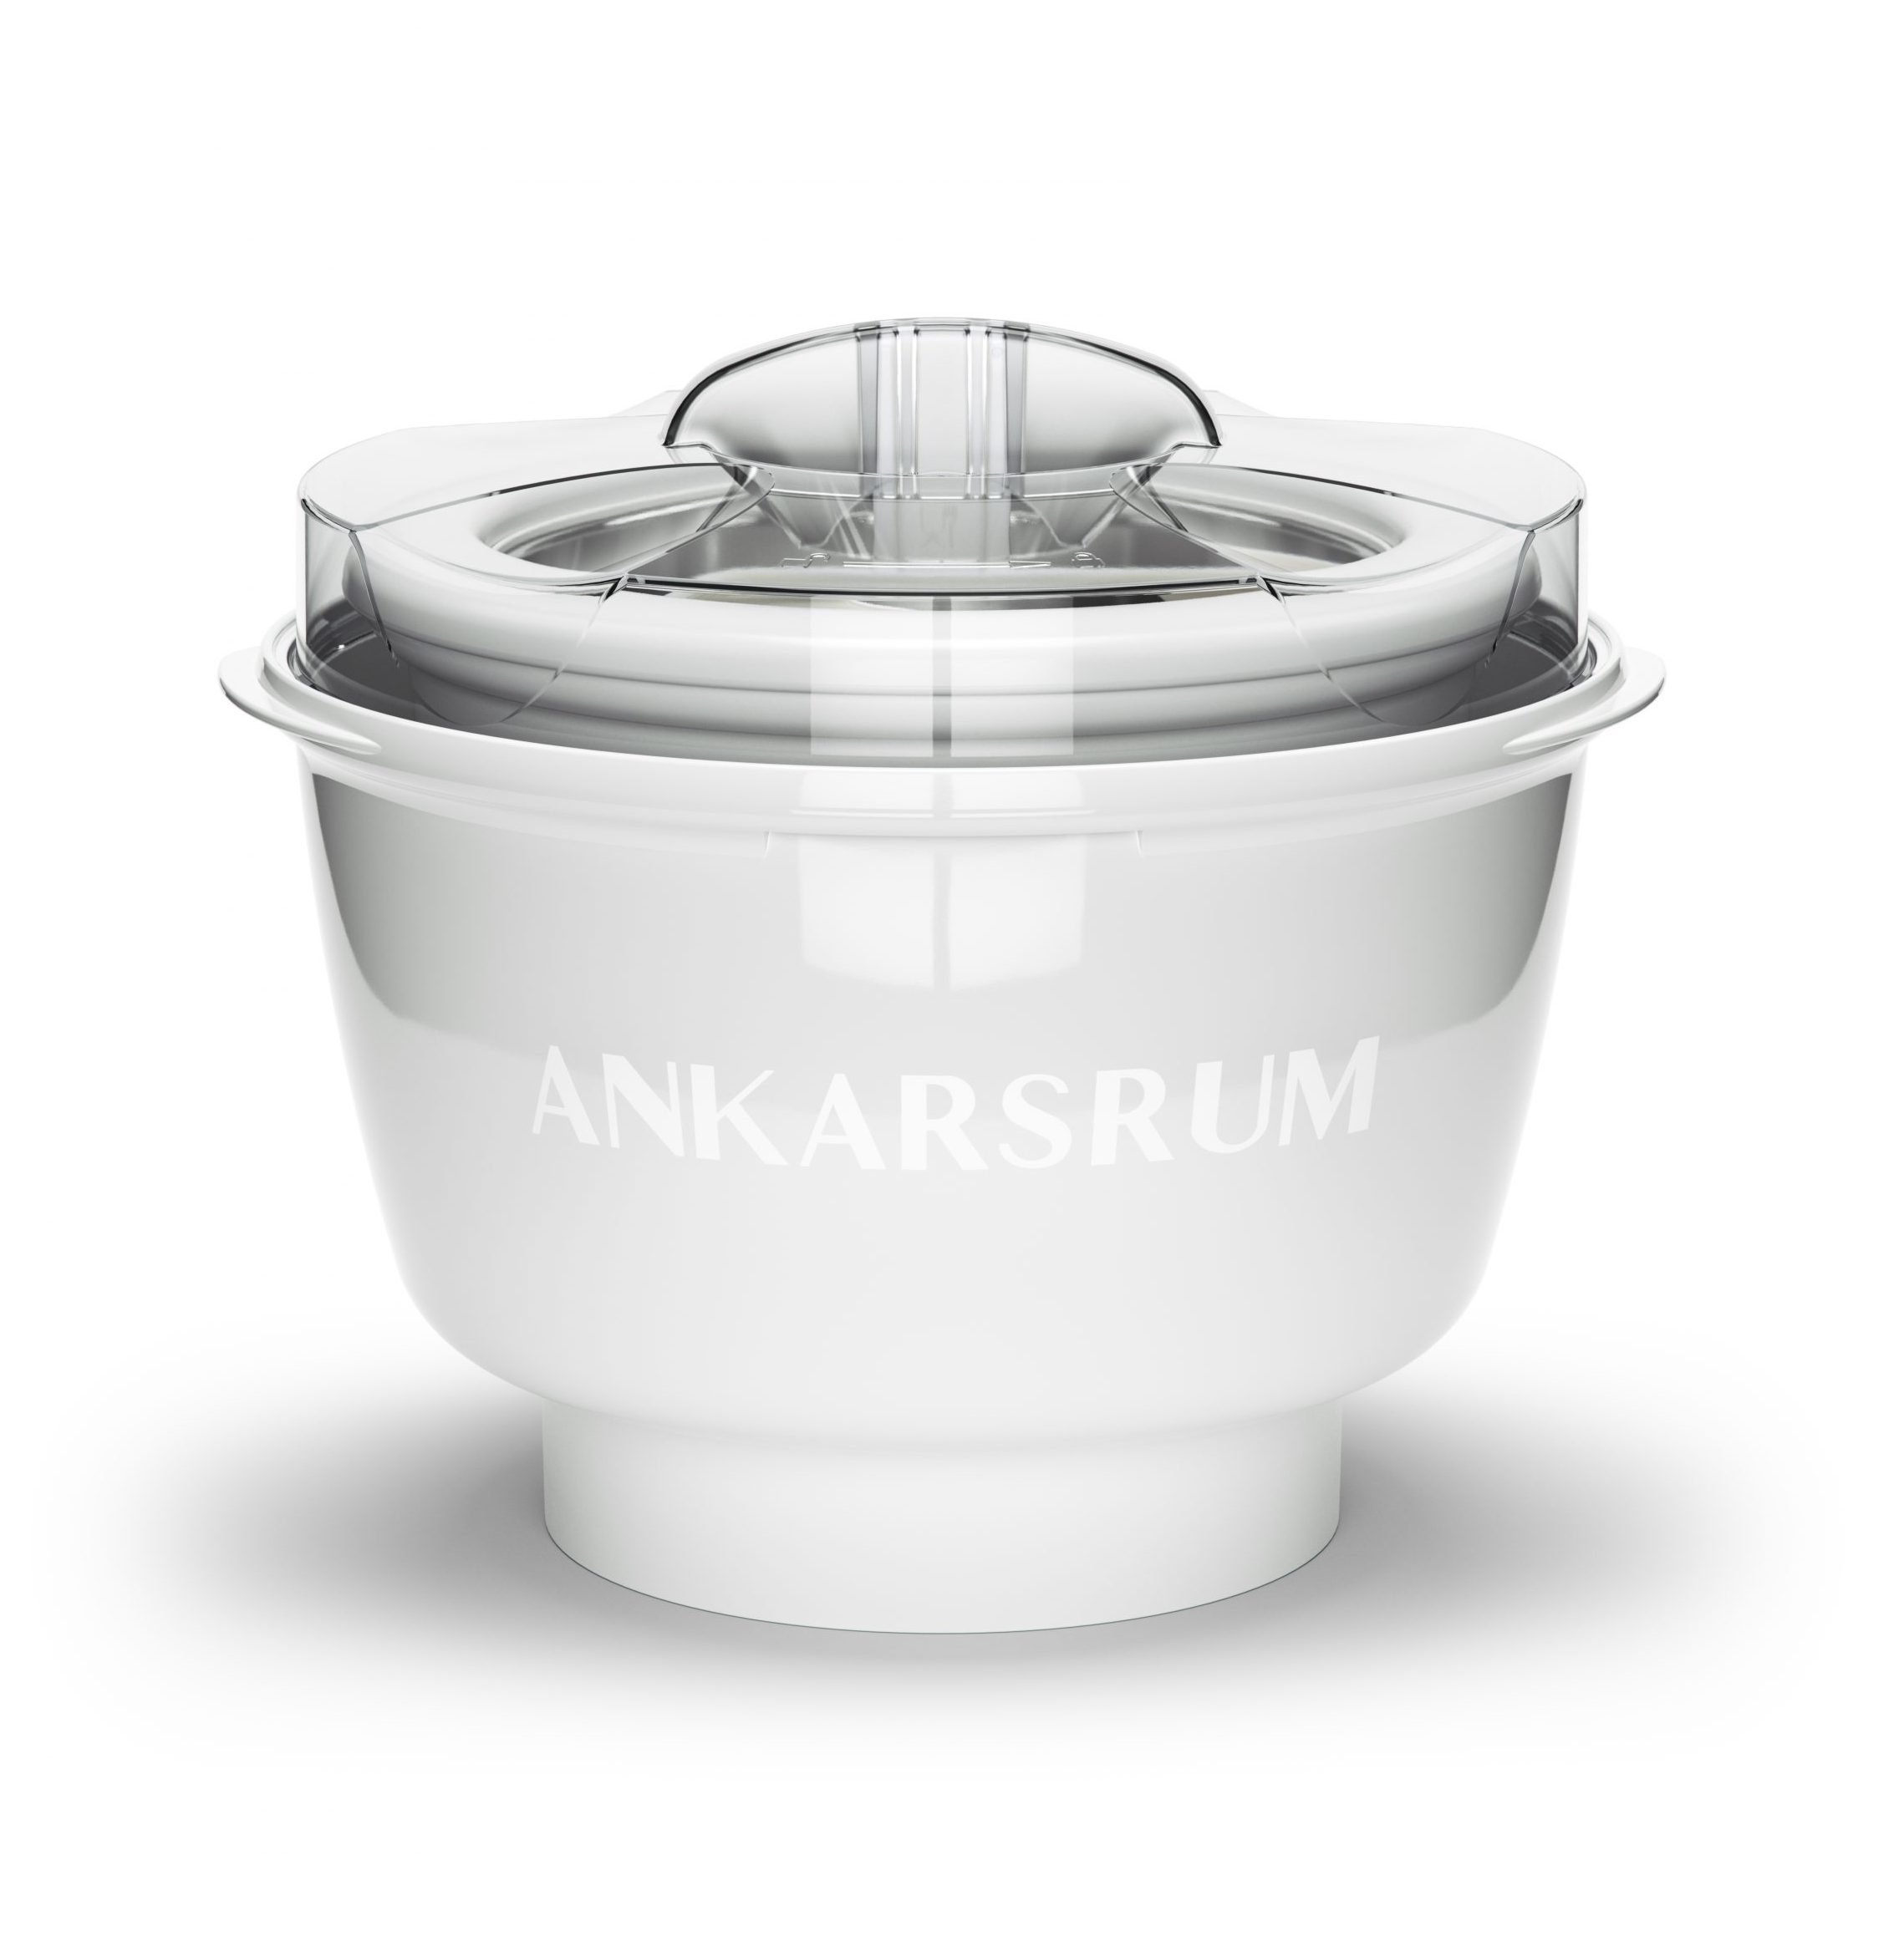 Ankarsrum Assistent Original Adds An Ice Cream Attachment Because